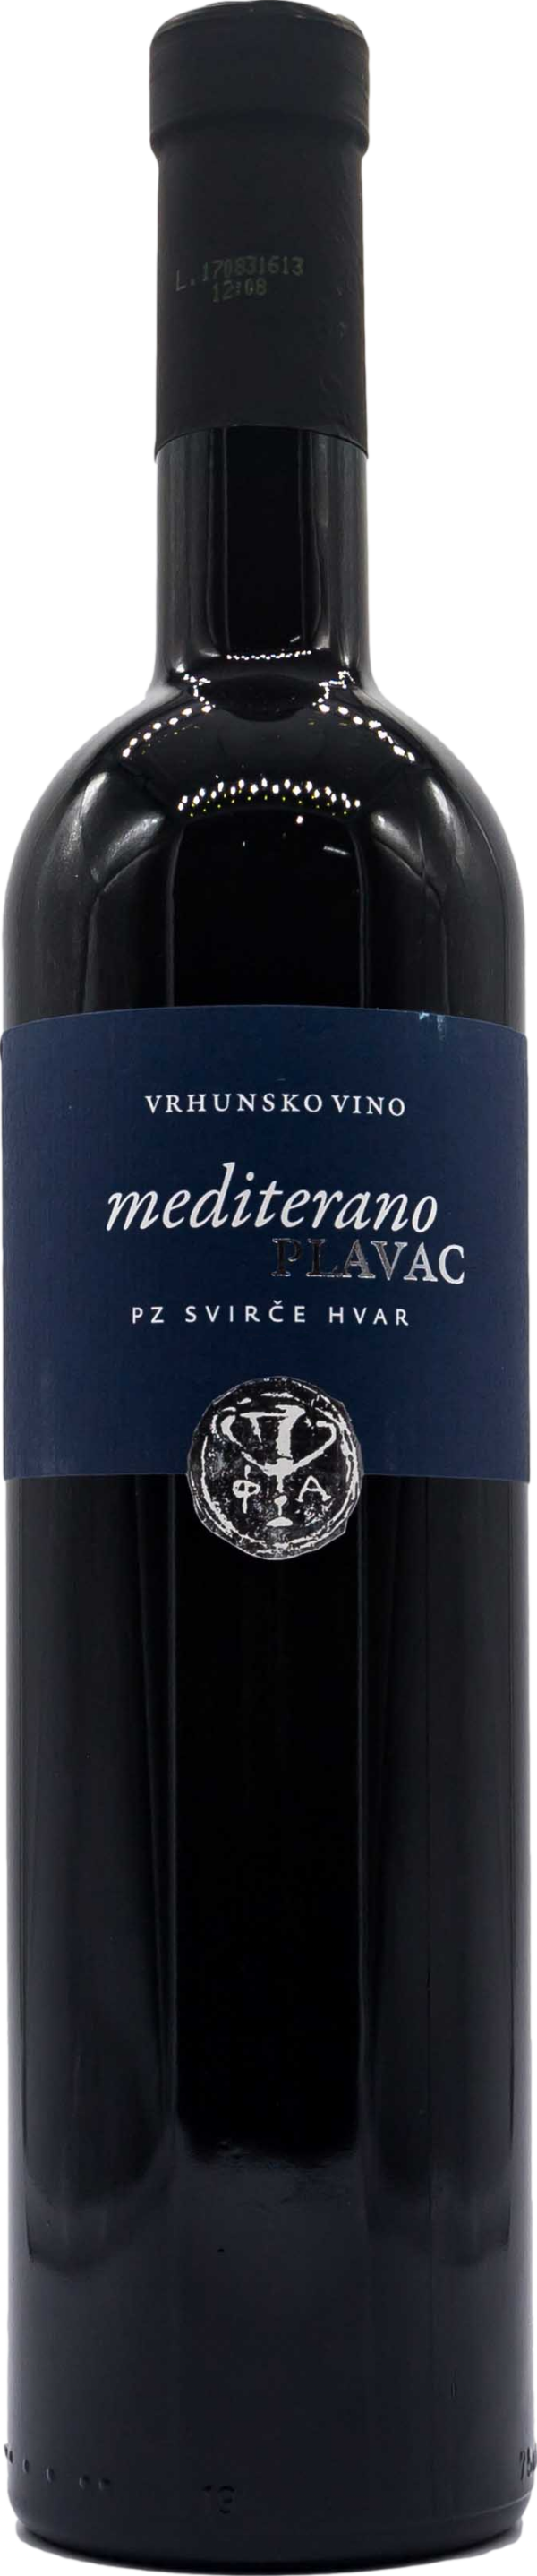 Product image of Svirce Plavac Mediterano 2019 from 8wines